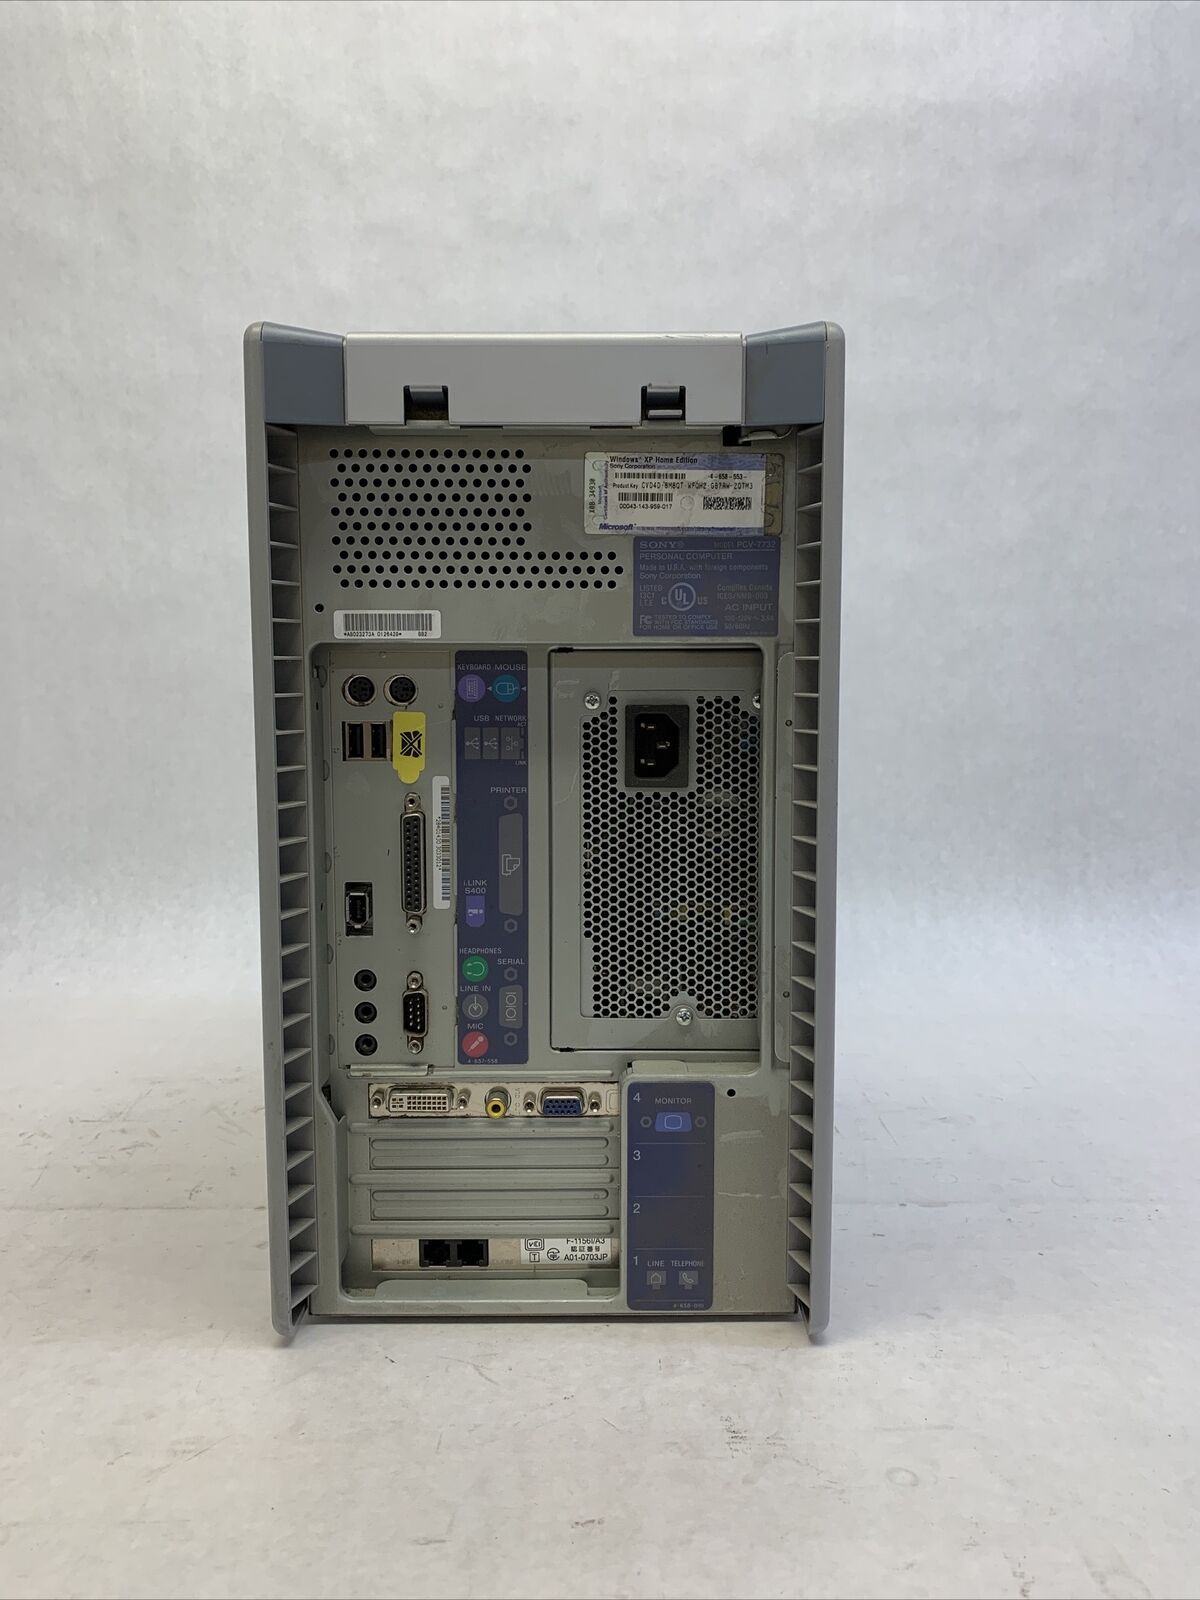 Sony PCV-RX560(OC) MT Intel Pentium 4 1.7GHz 256MB RAM No HDD No OS Bad Cap